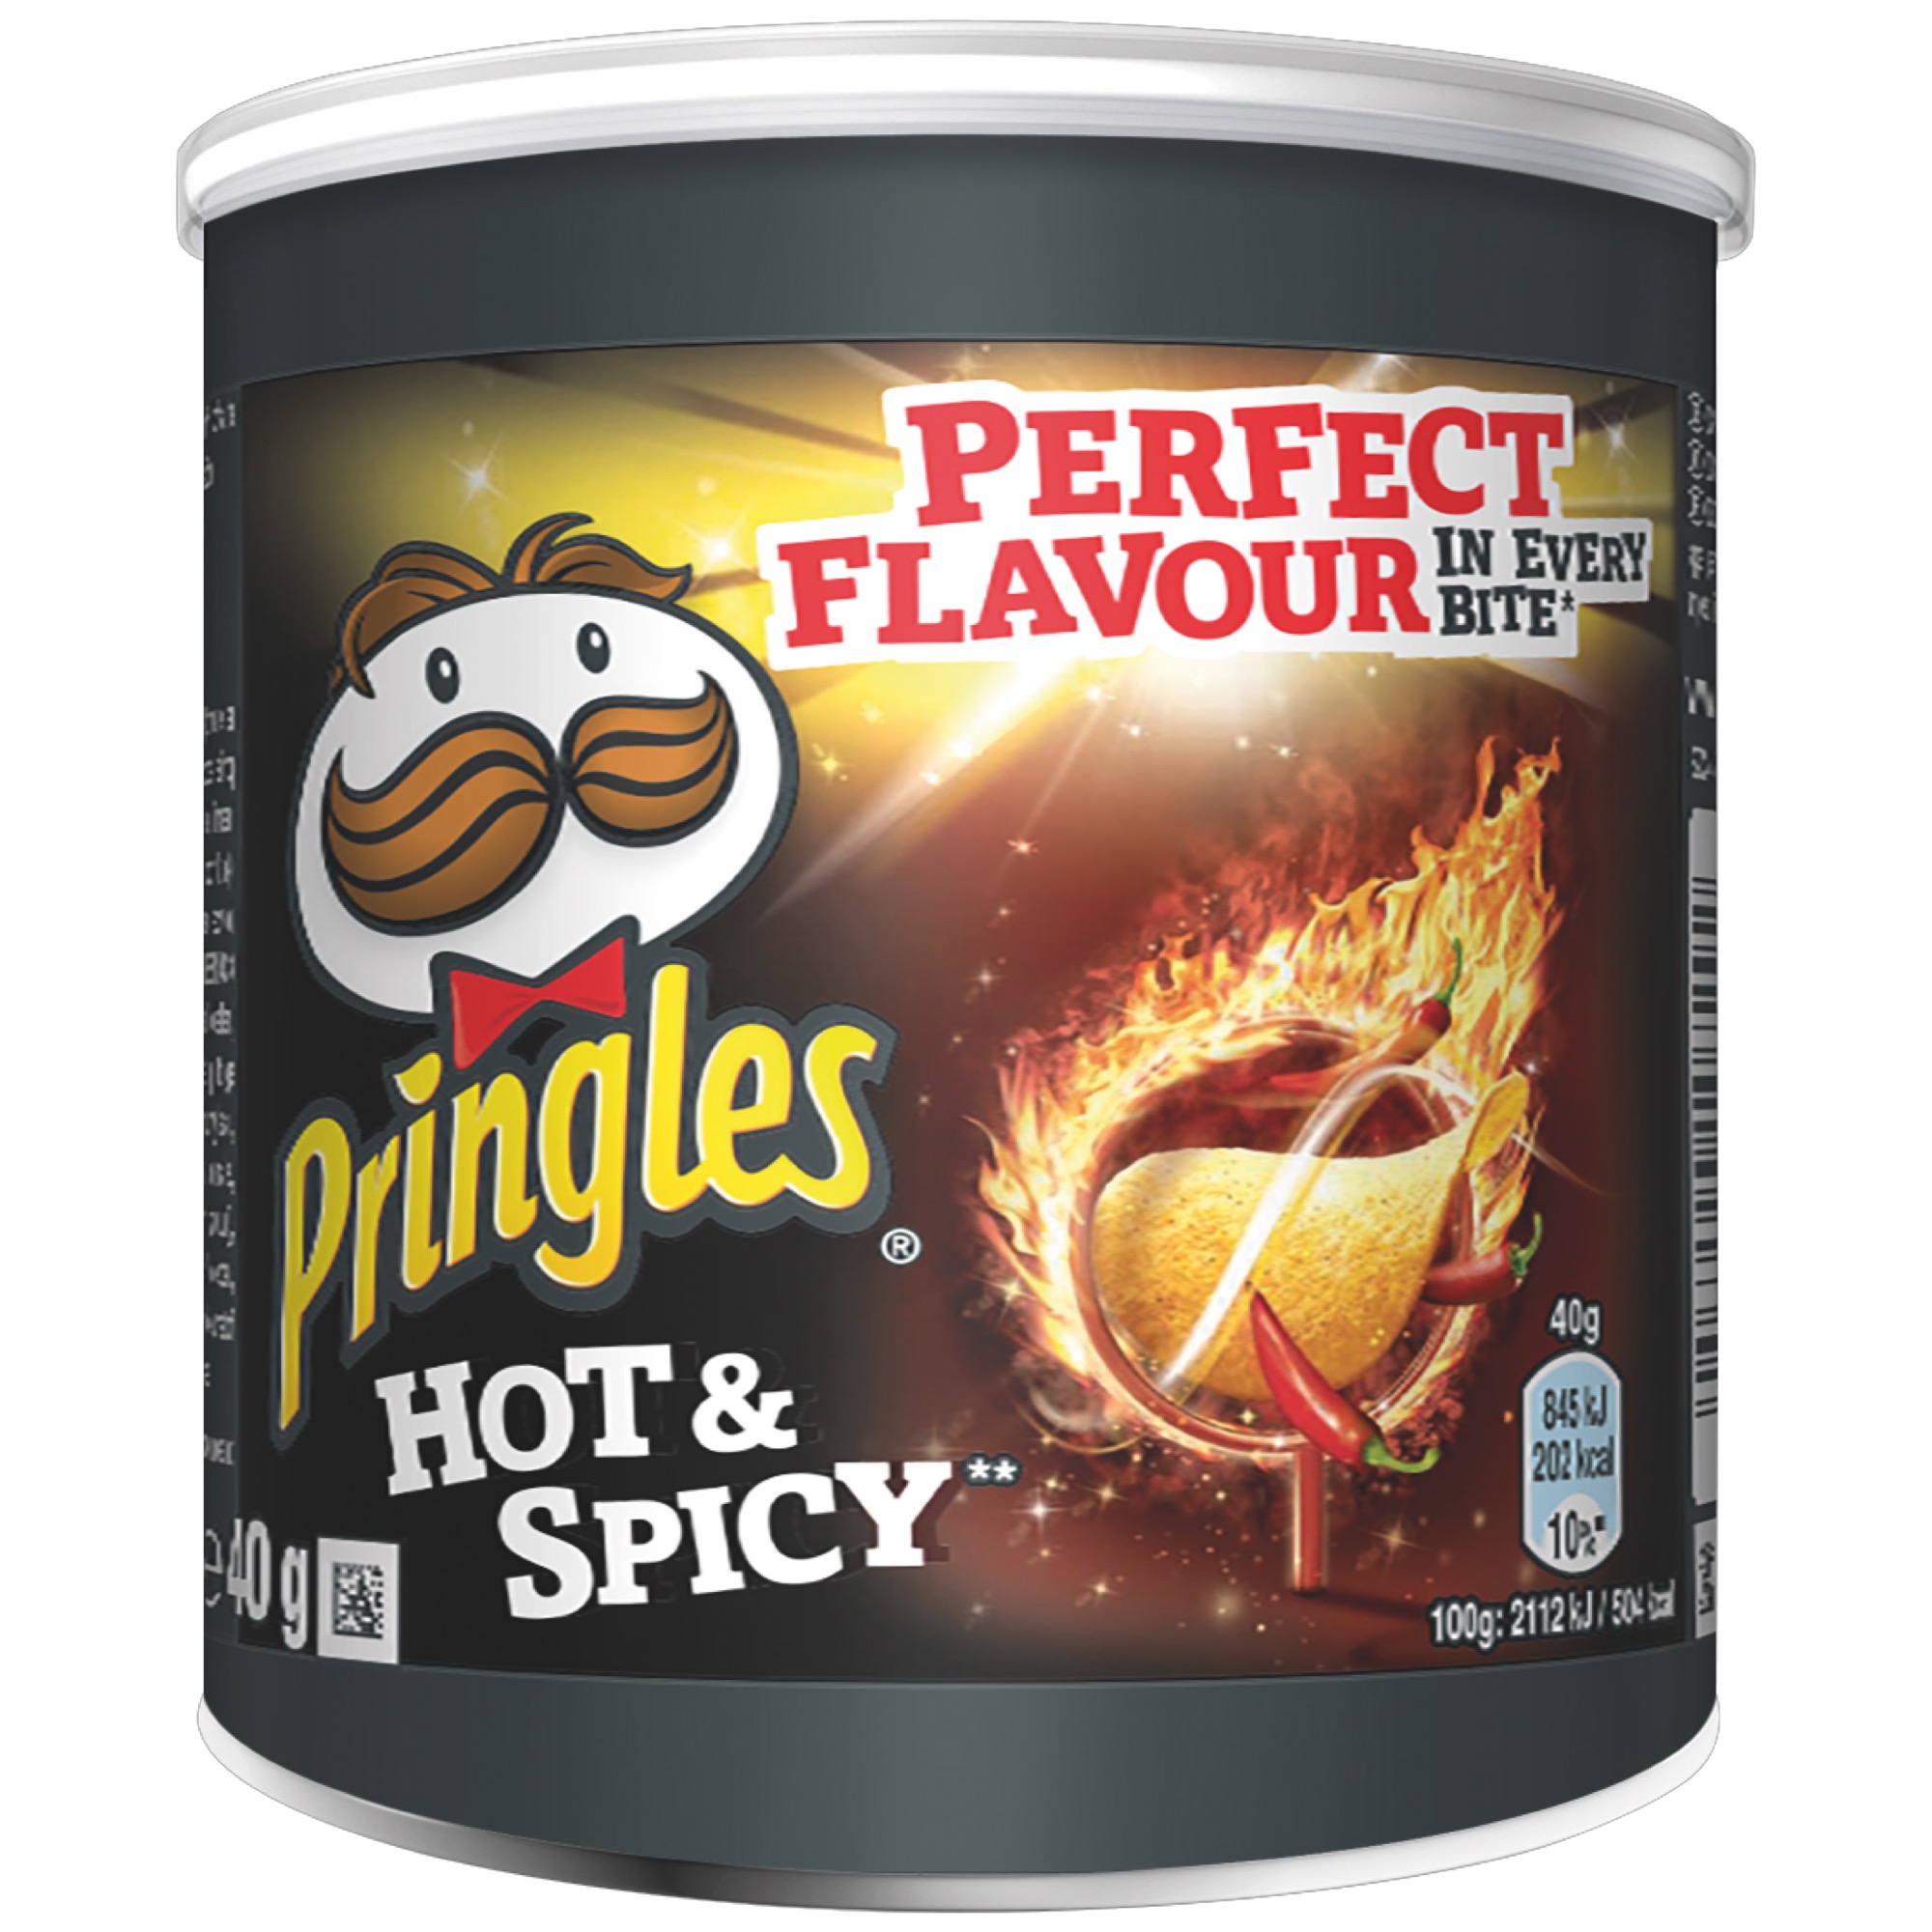 Pringles 40g Hot & Spicy